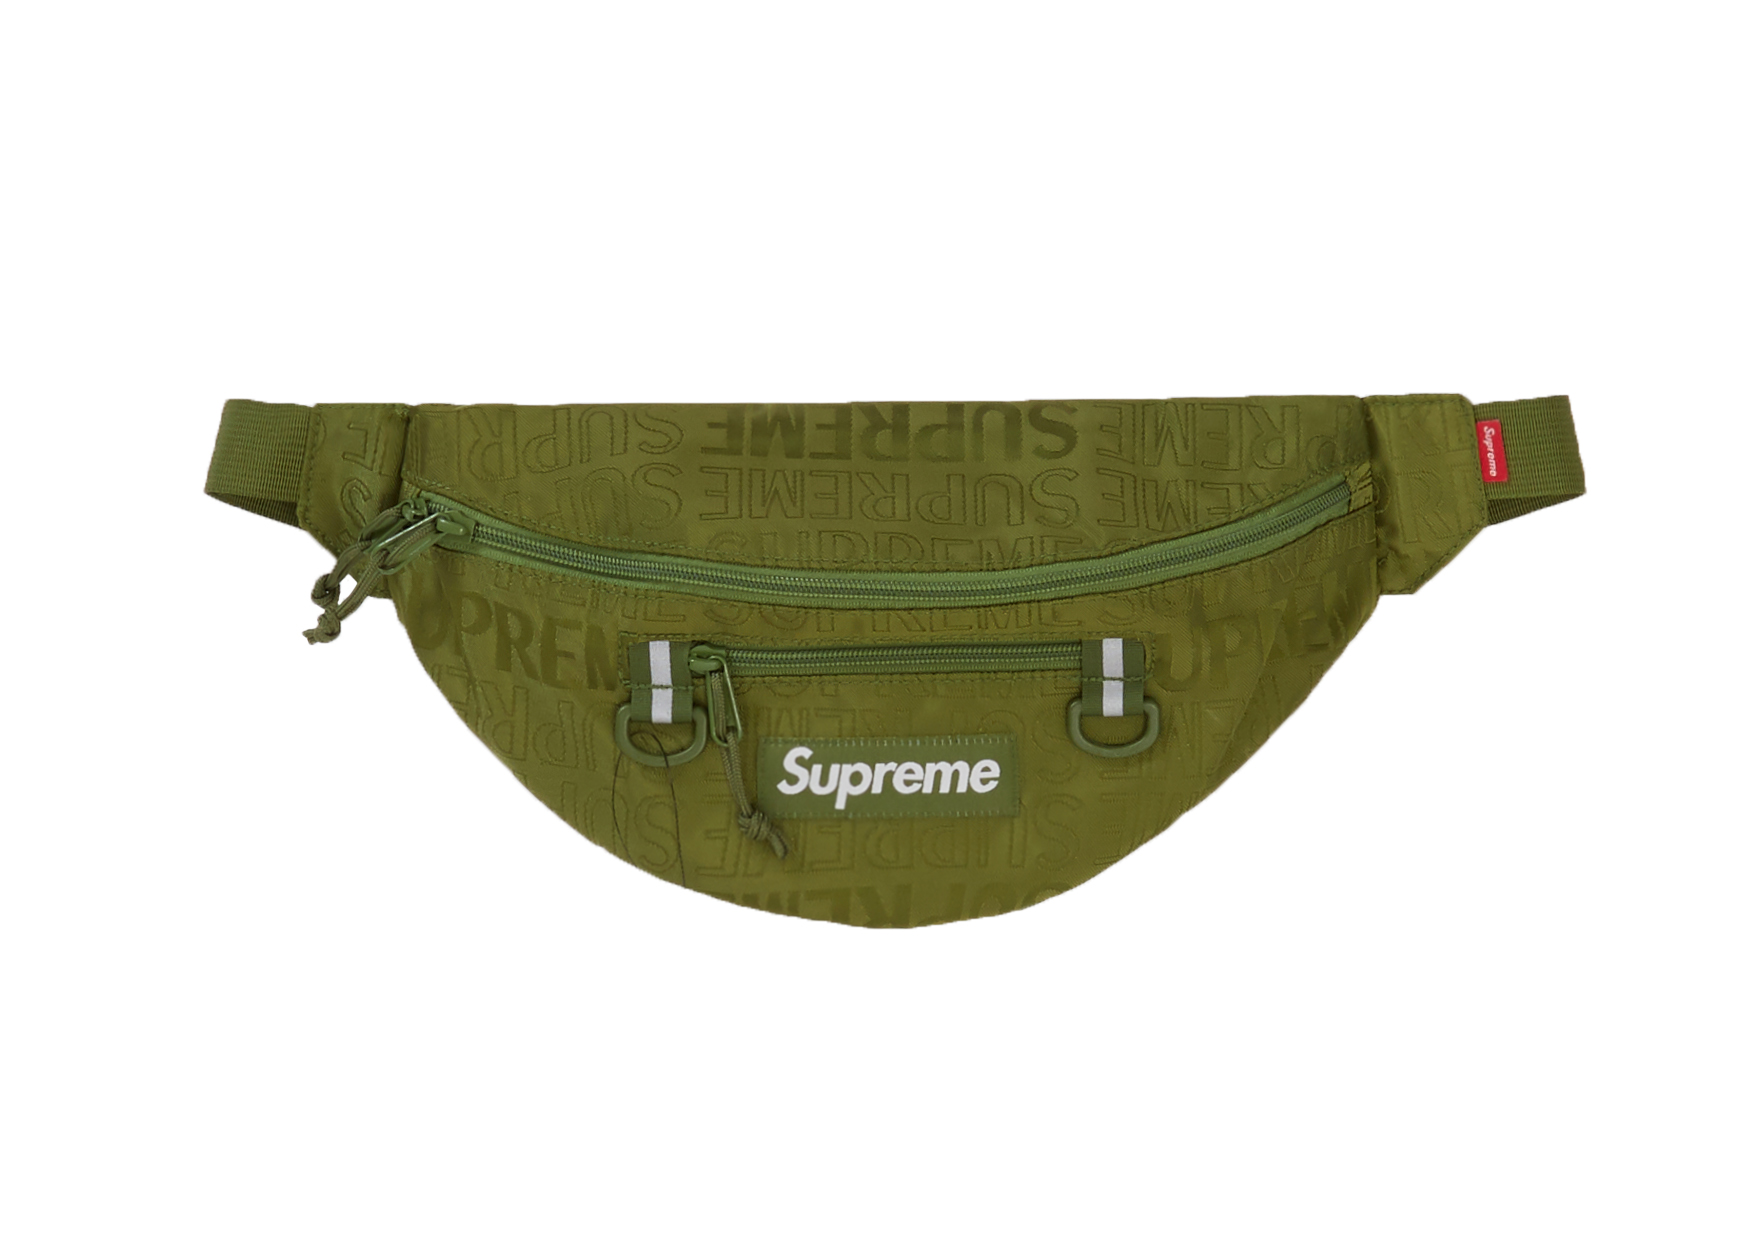 supreme waist bag retail price